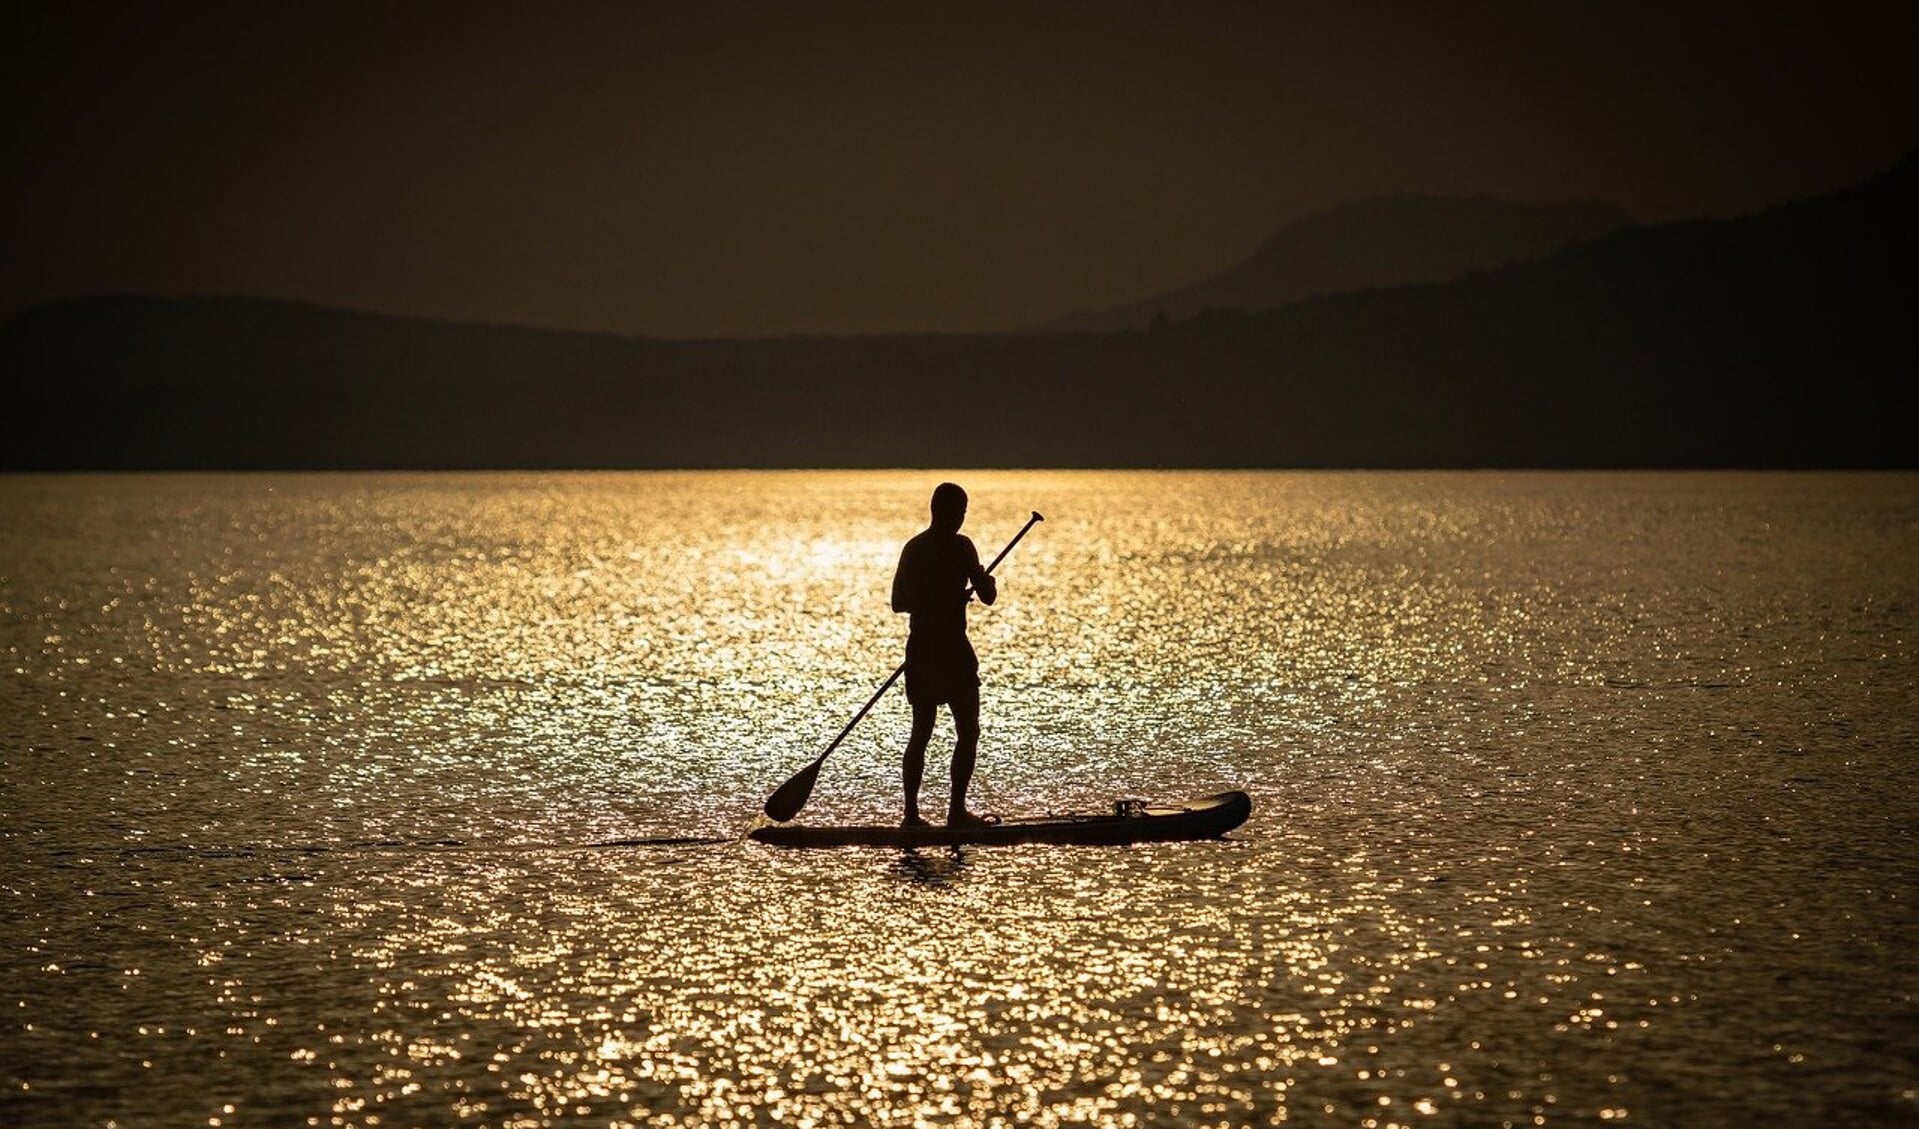 https://pixabay.com/photos/man-lake-silhouette-rowing-summer-8102619/